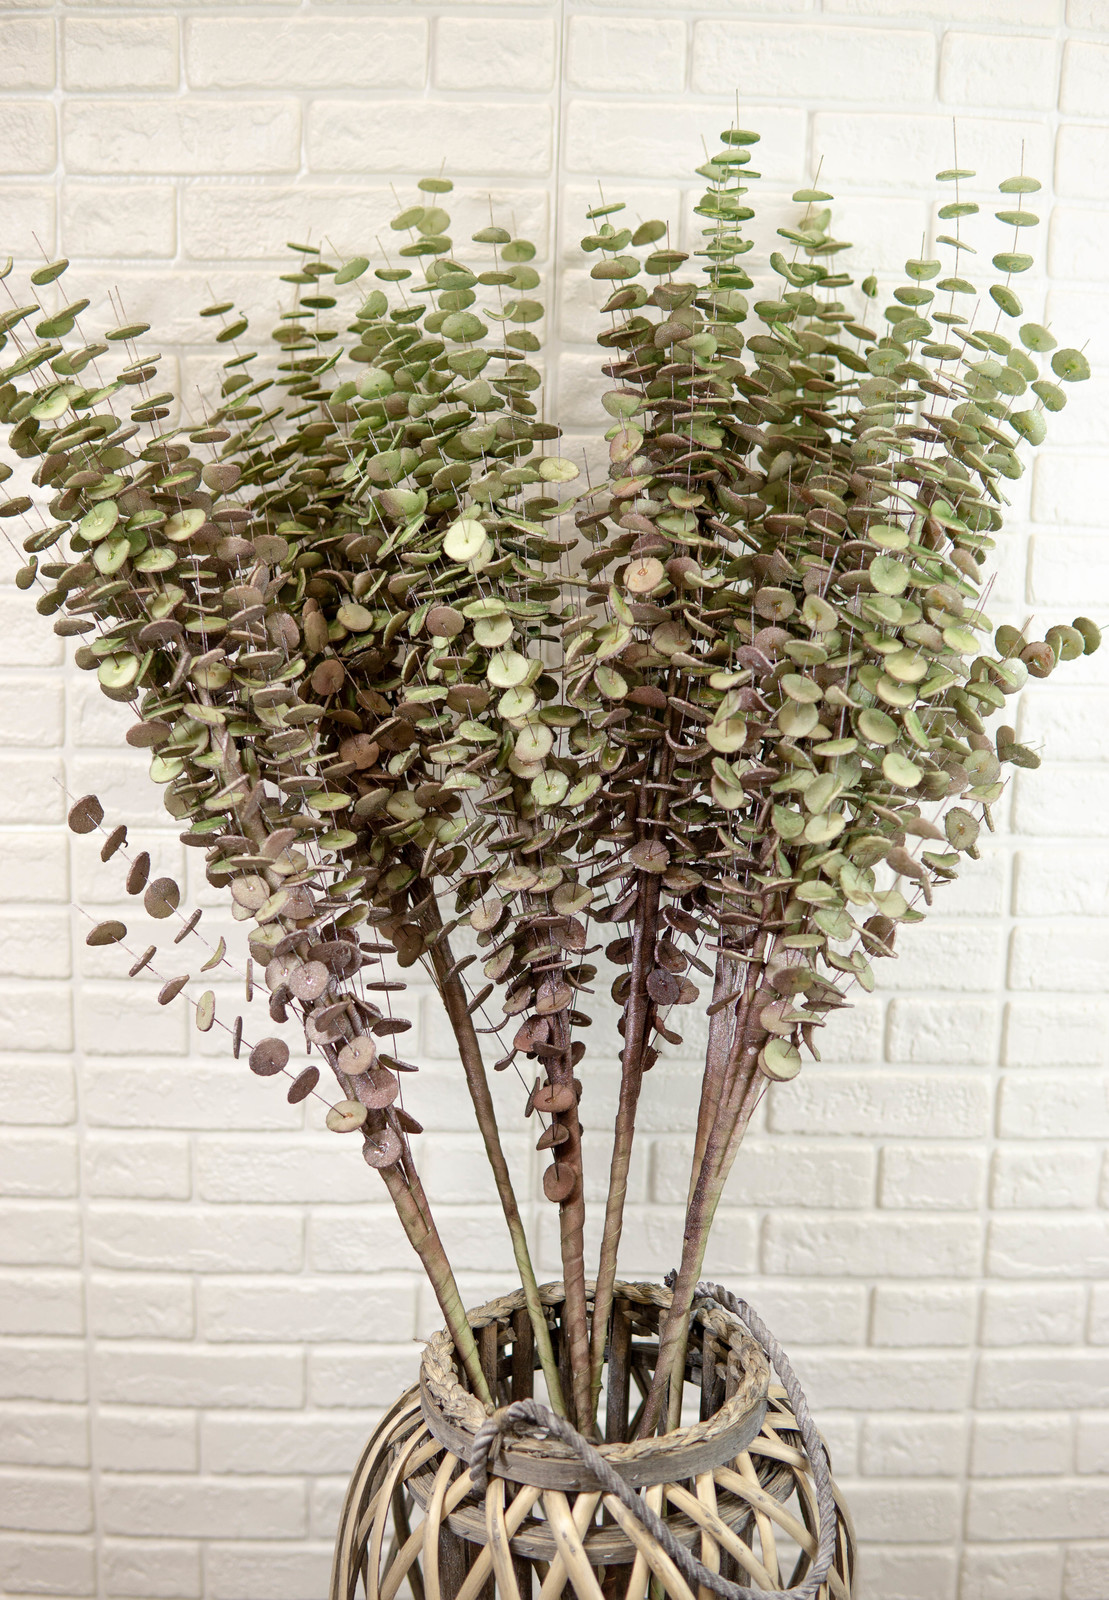 Set of 6 Realistic Artificial Botanica Shrubs Faux Plants Fern Grass Leaf Stems - $89.99